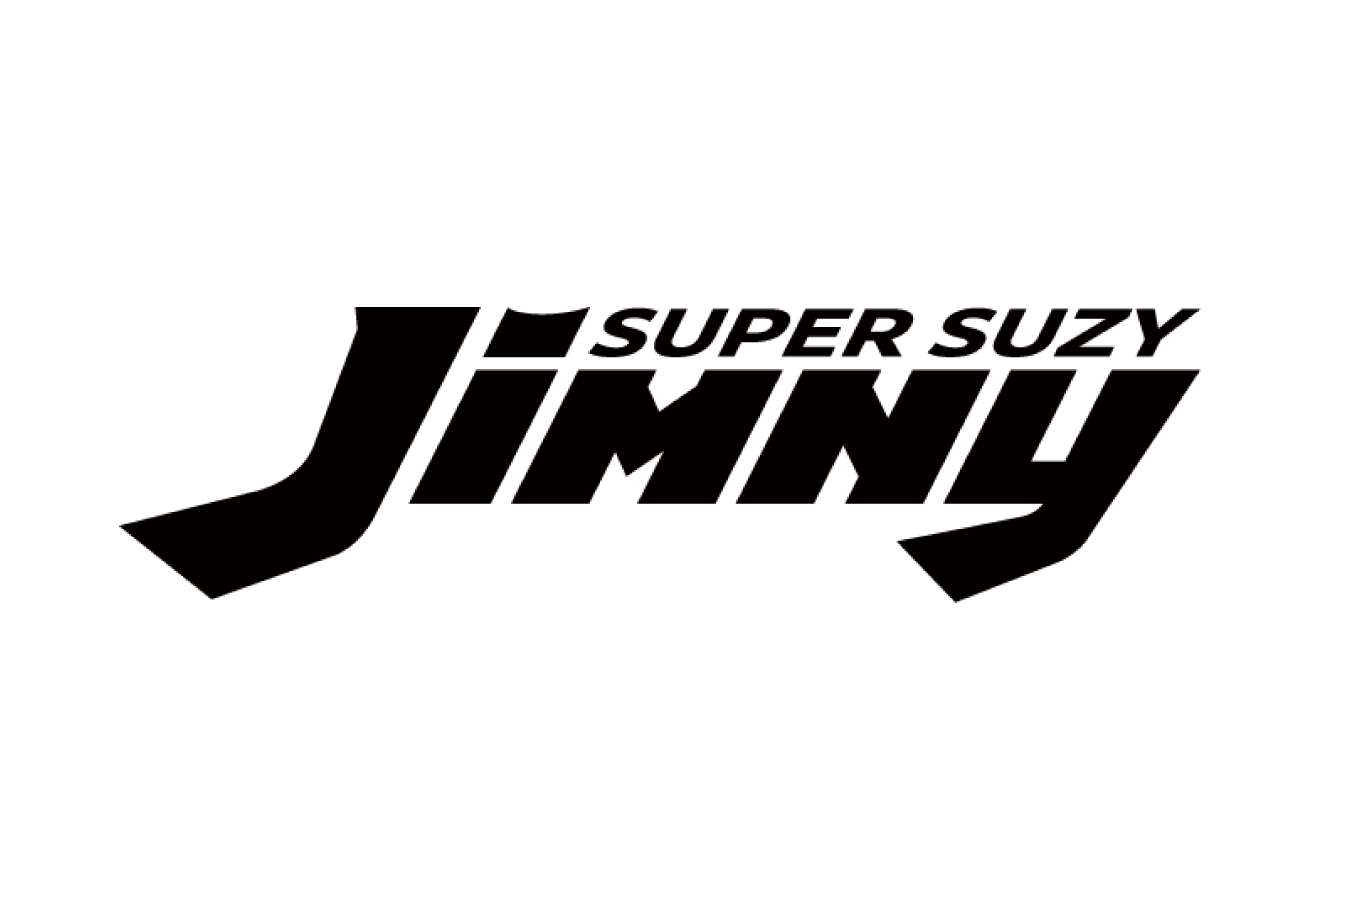 Jimny SUPER SUZY